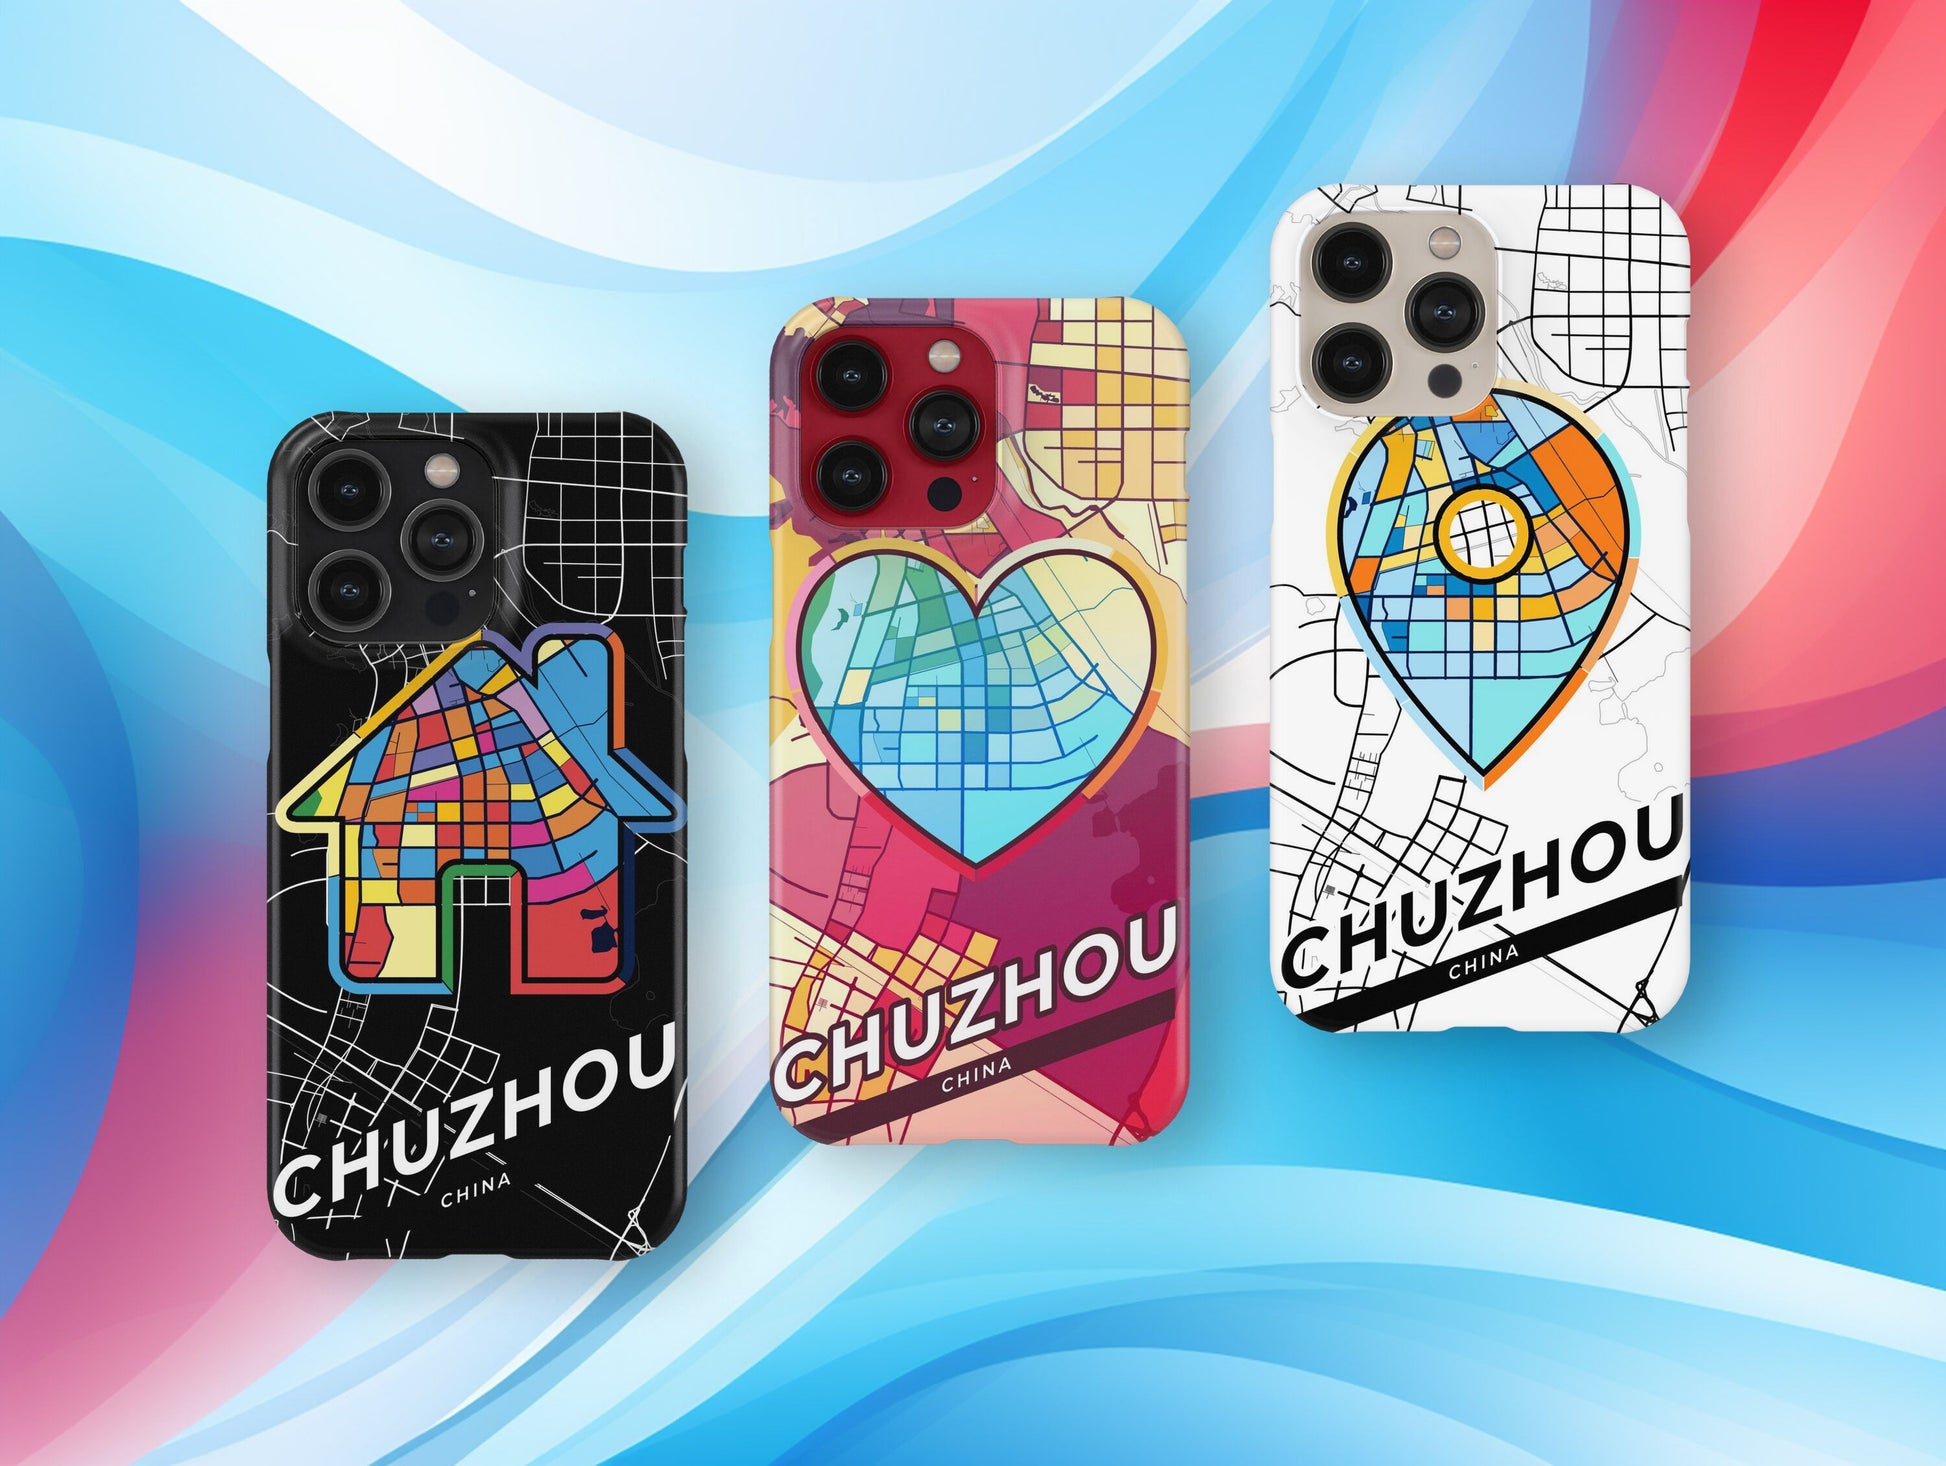 Chuzhou China slim phone case with colorful icon. Birthday, wedding or housewarming gift. Couple match cases.